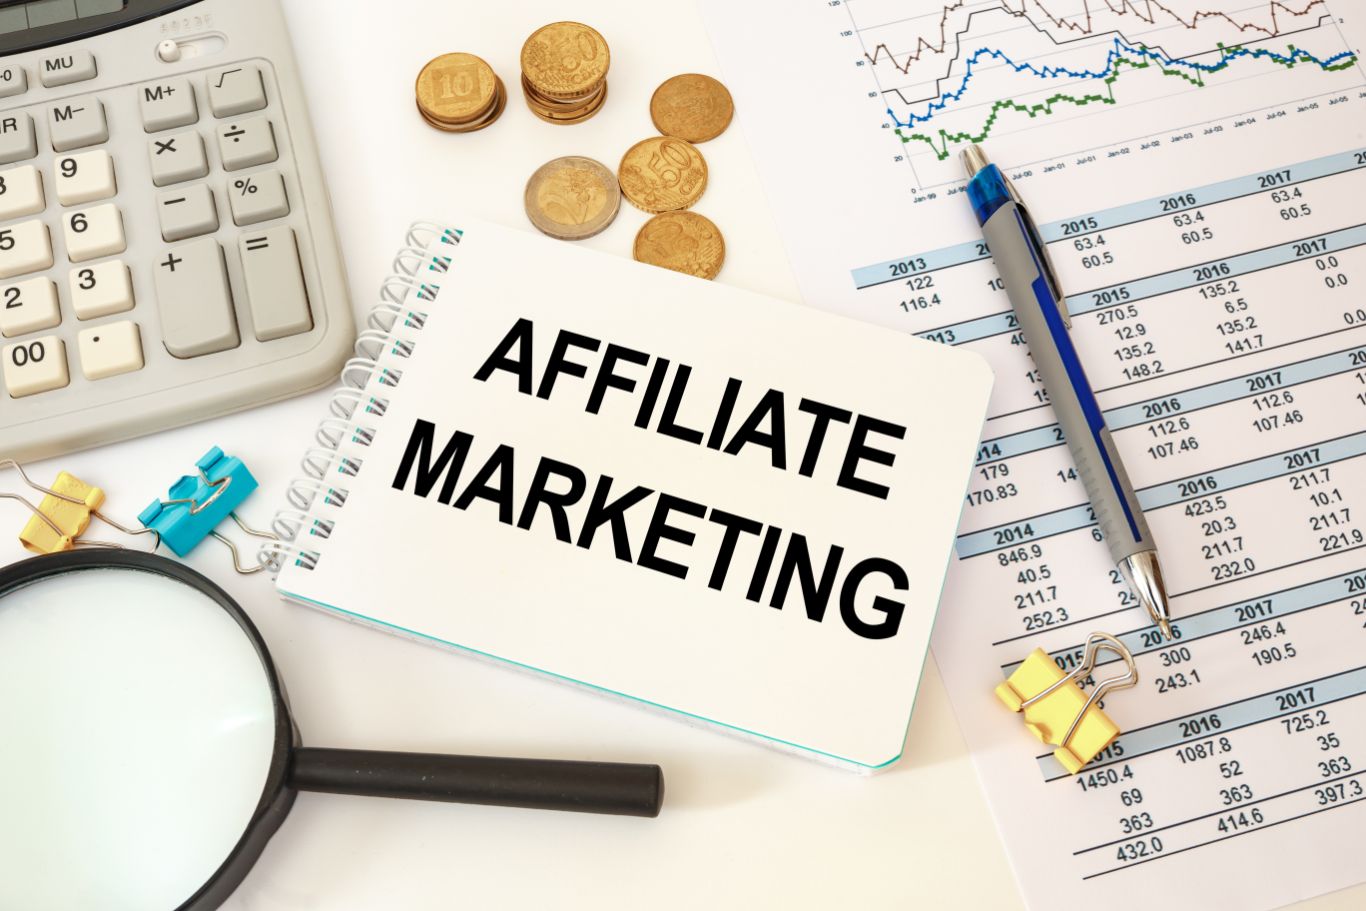 jasa pembuatan website affiliate marketing terbaik full support,, jasa pembuatan website affiliate marketing, jasa pembuatan website affiliate, jasa website affiliate